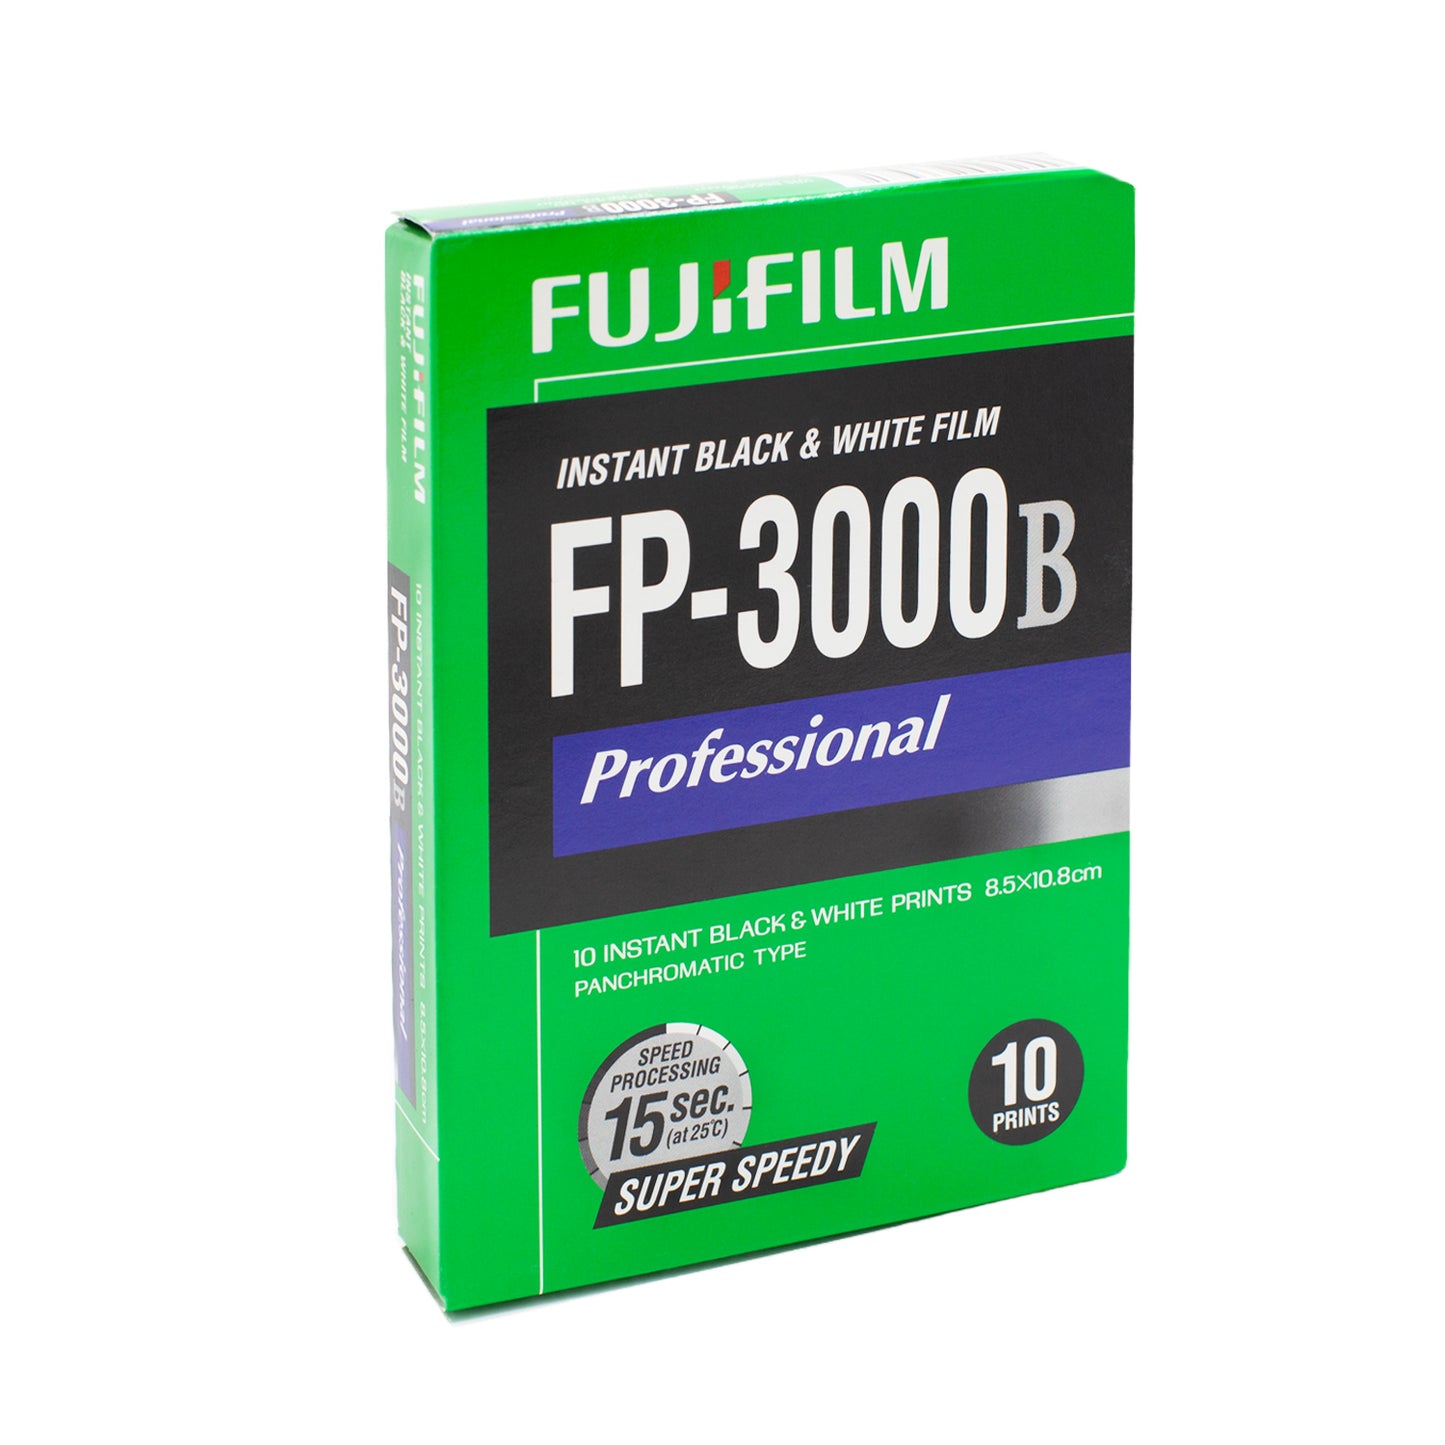 FUJIFILM INSTAX FILM FP-100C/FP-100B/FP-3000B/FP-100C SILK POLAROID PACKFILM